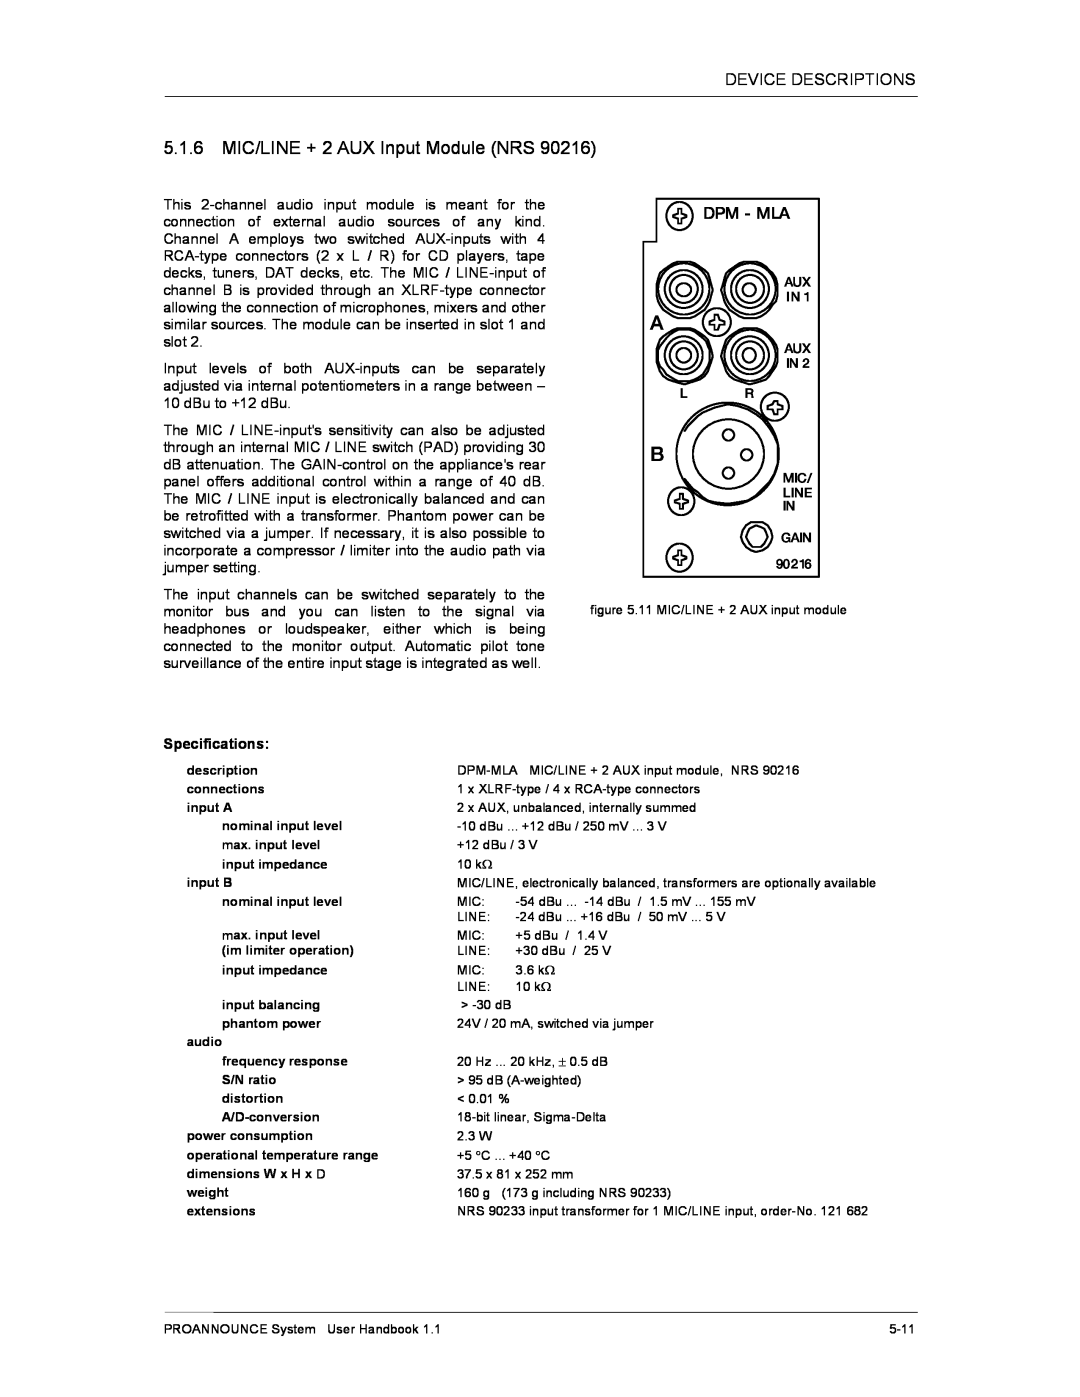 Dynacord DPM 4000 manual 5.1.6 MIC/LINE + 2 AUX Input Module NRS 